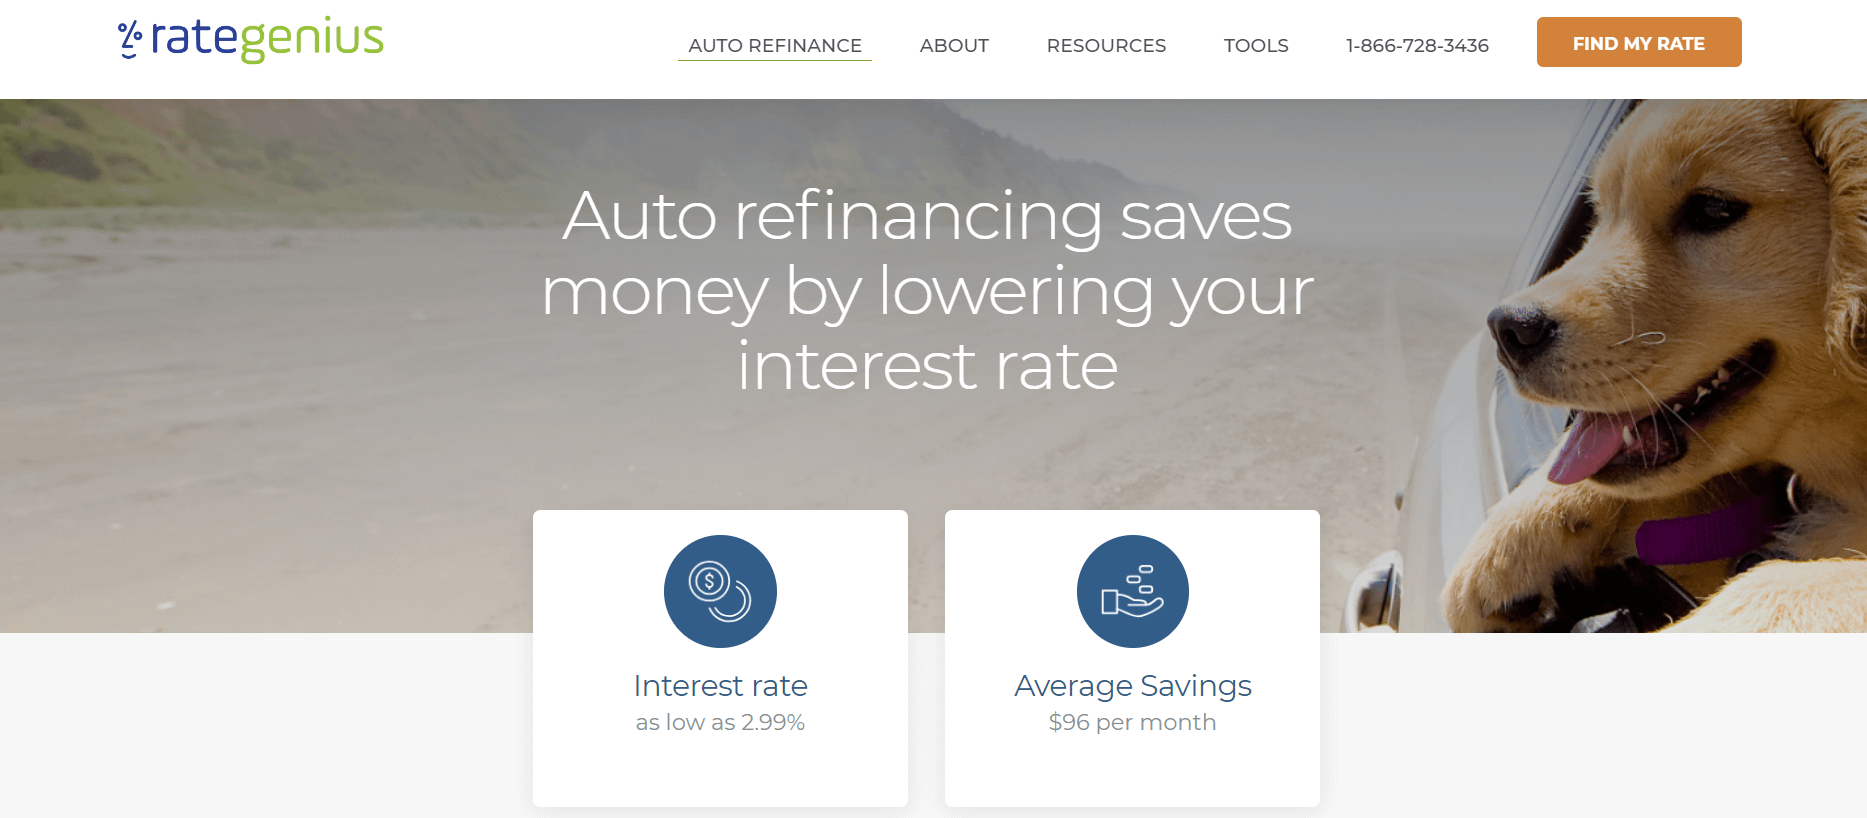 Rate Genius auto refinance page